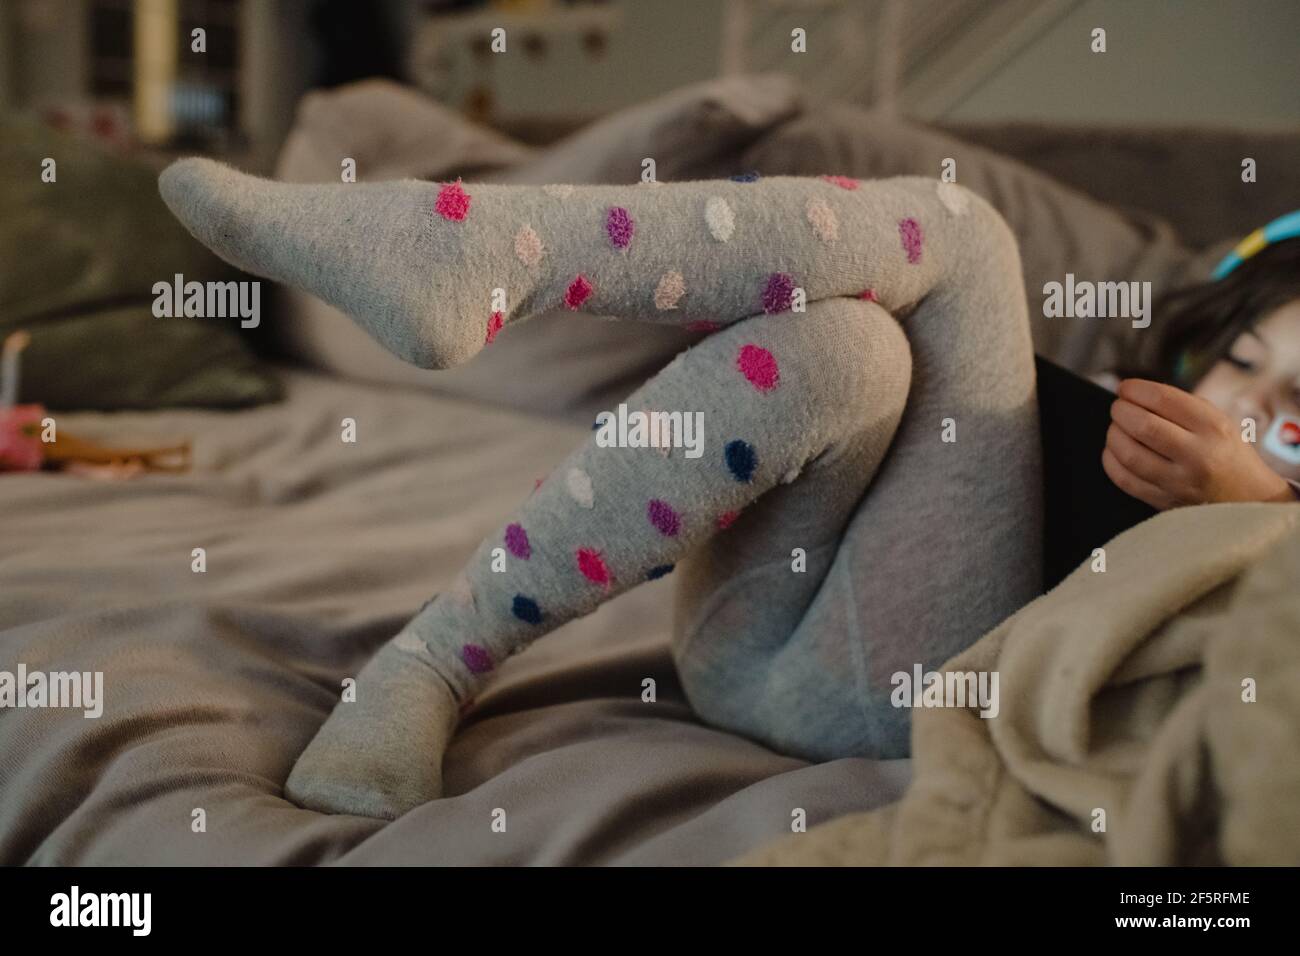 Child playing games on iPad wearing polka dot tights Stock Photo